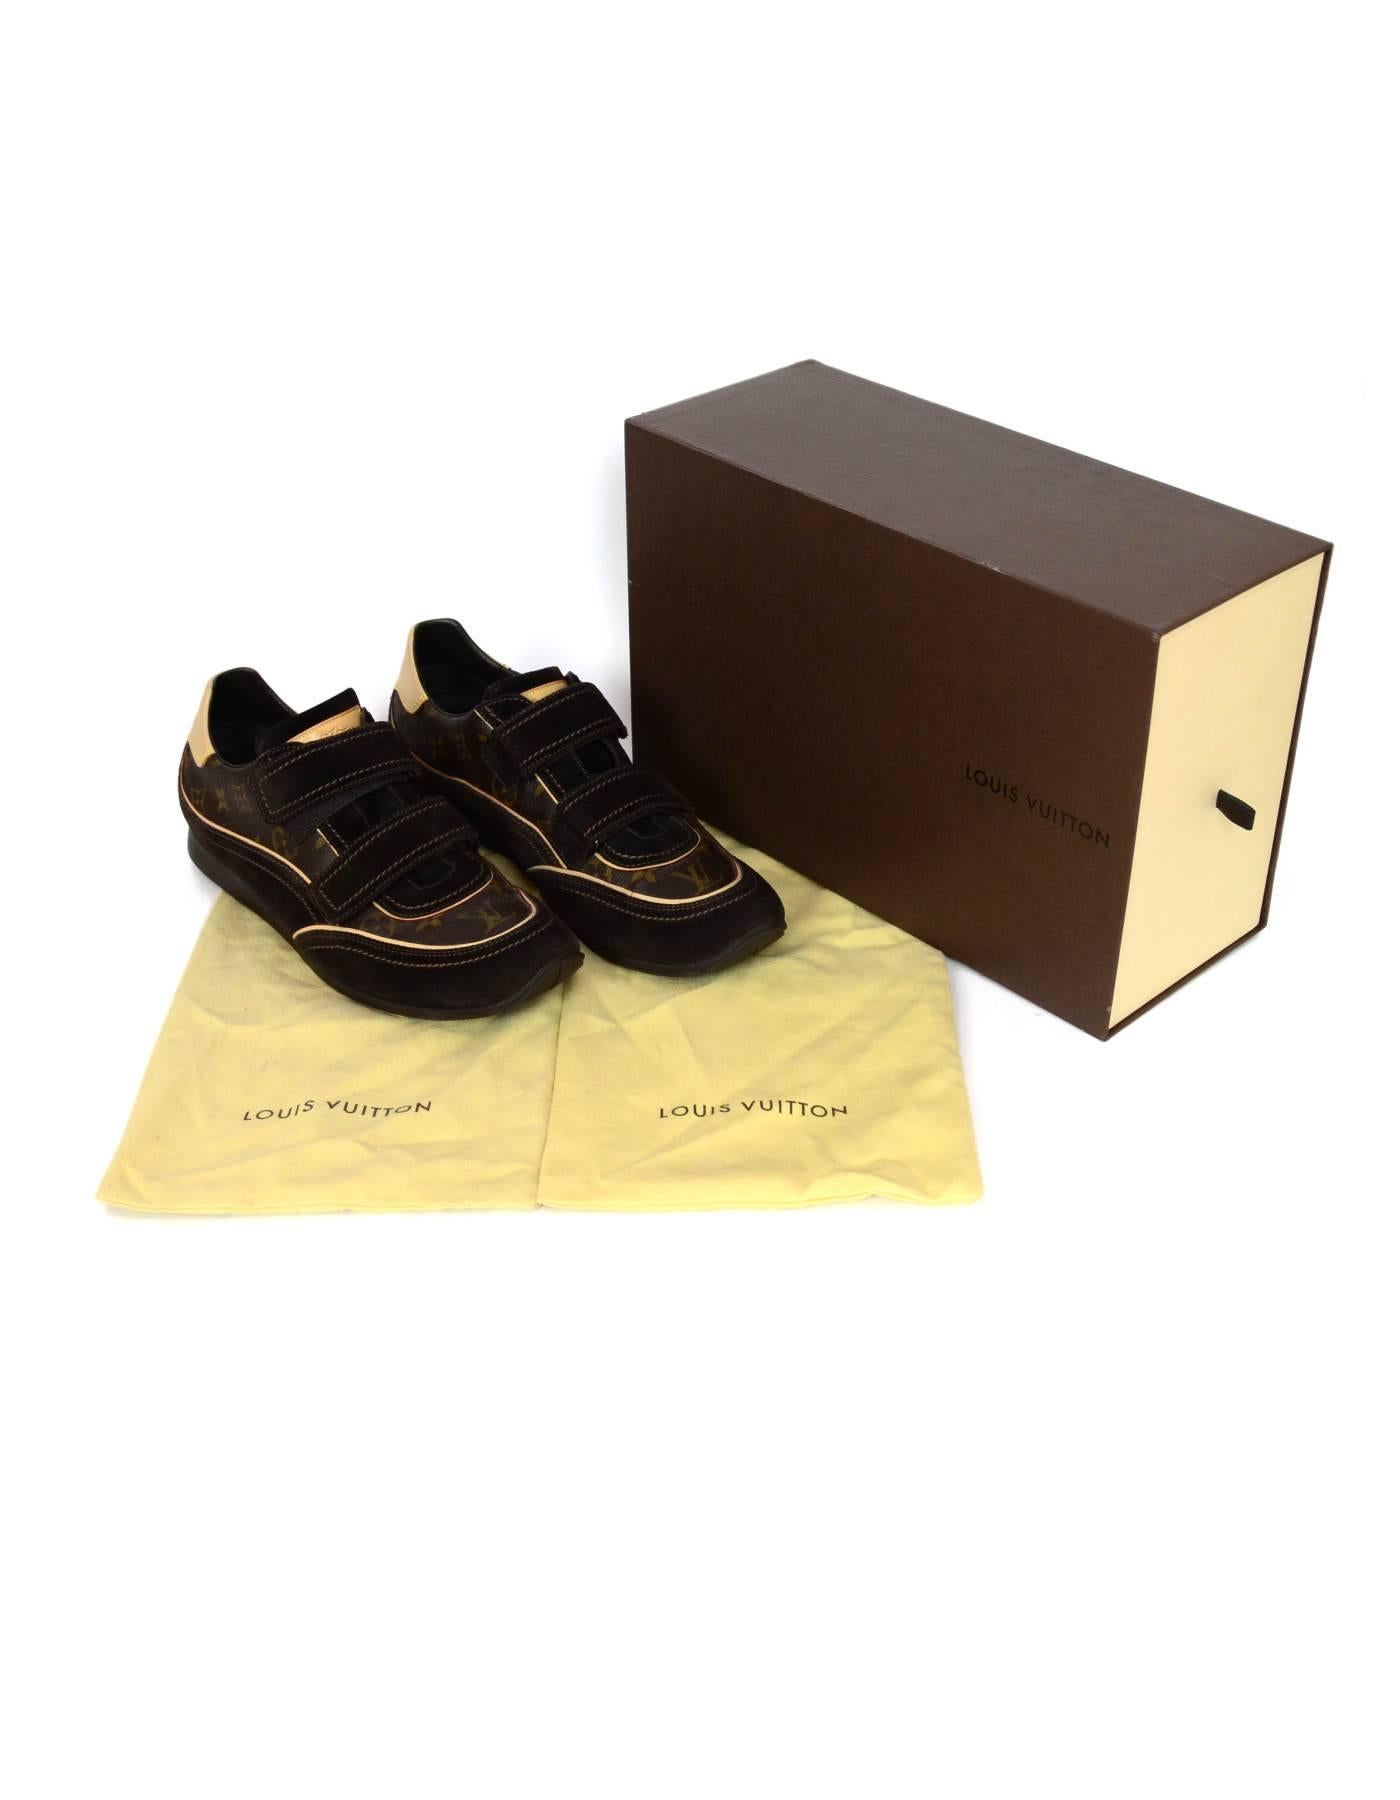 Louis Vuitton's Men's Monogram Speeding Velcro Sneakers Sz 11 with Box, DB 1